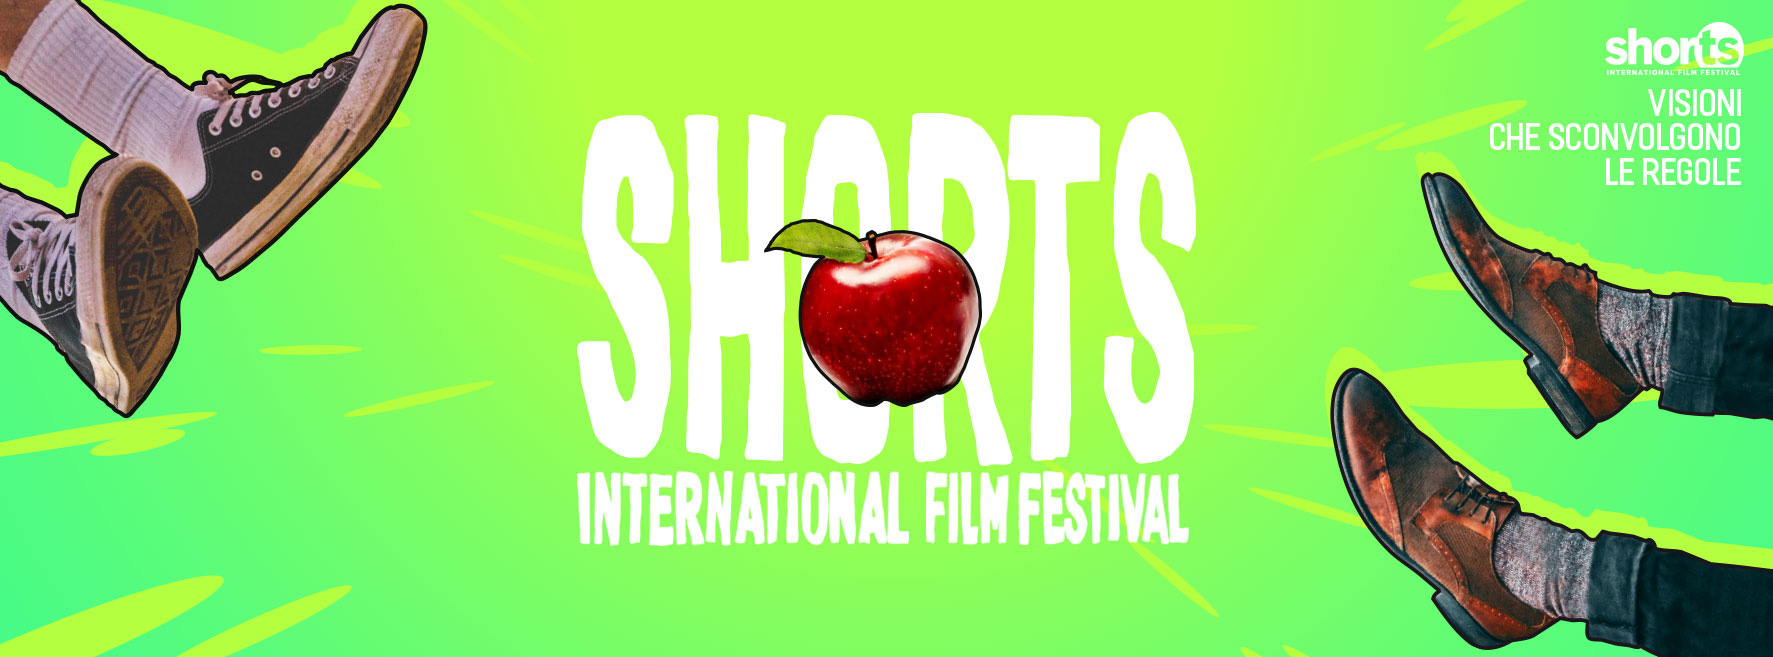 ShorTS International Film Festival 19, i Vincitori